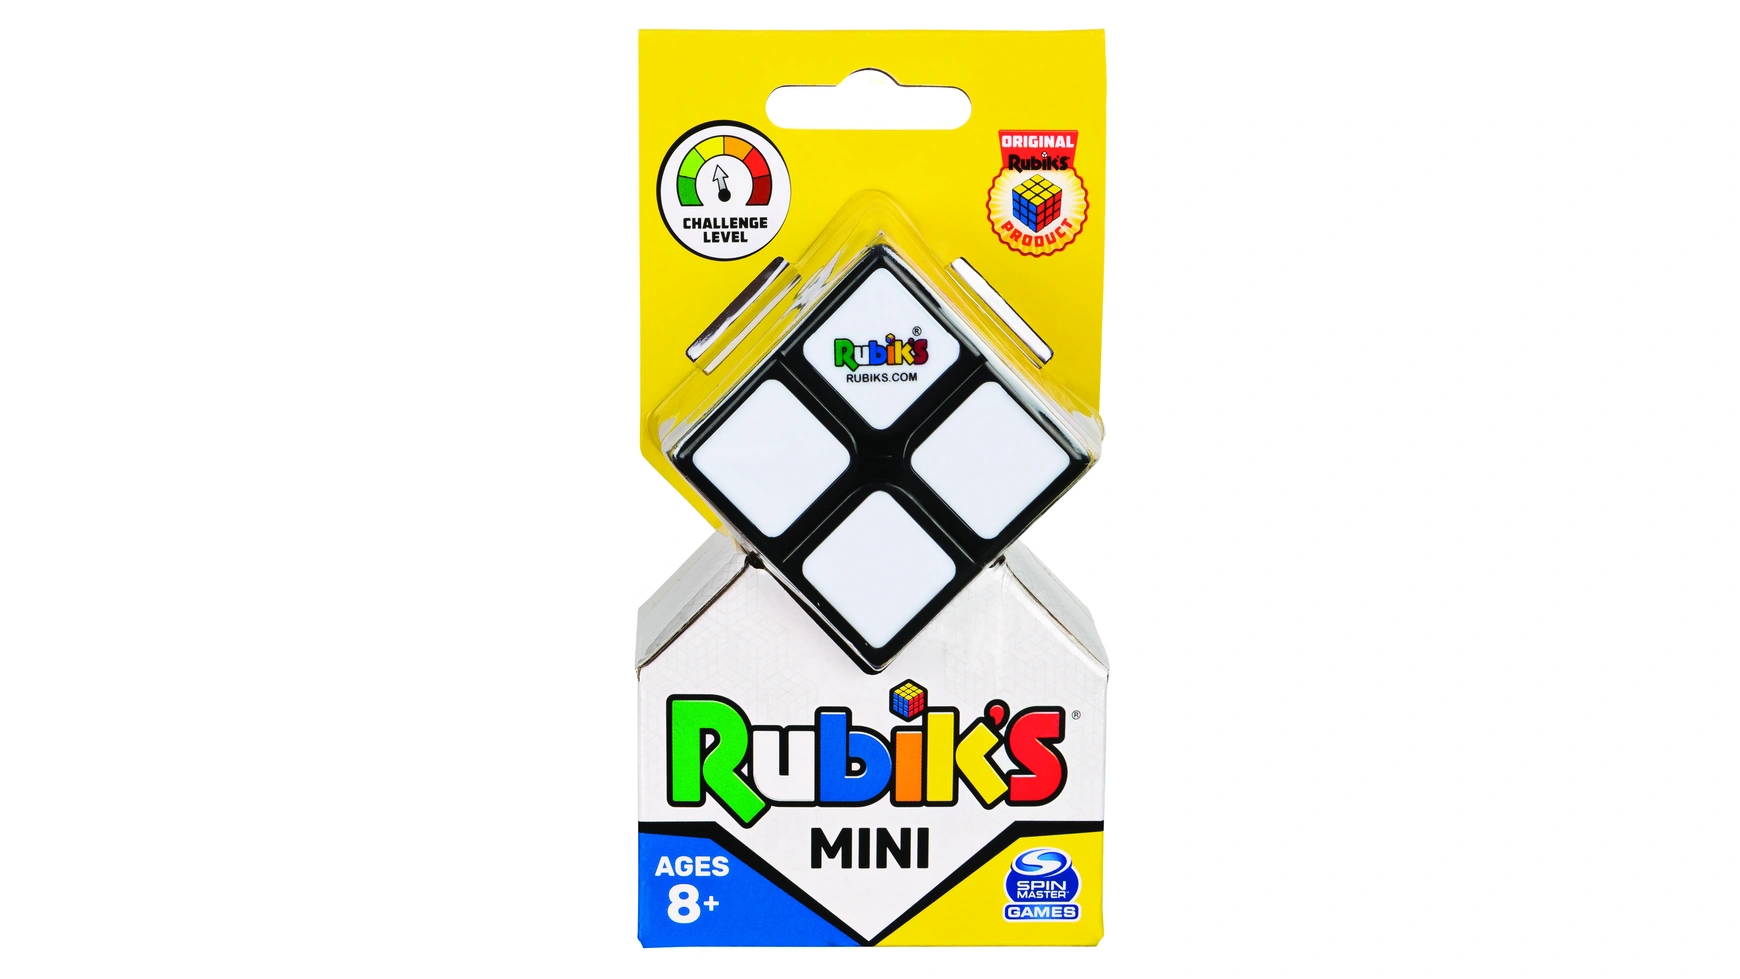 Rubik's Mini 2x2 Кубик Рубика кубик 2x2 для начинающих от 8 лет и для путешествий Spin Master чехол mypads кубик рубика для meizu pro 7 plus задняя панель накладка бампер